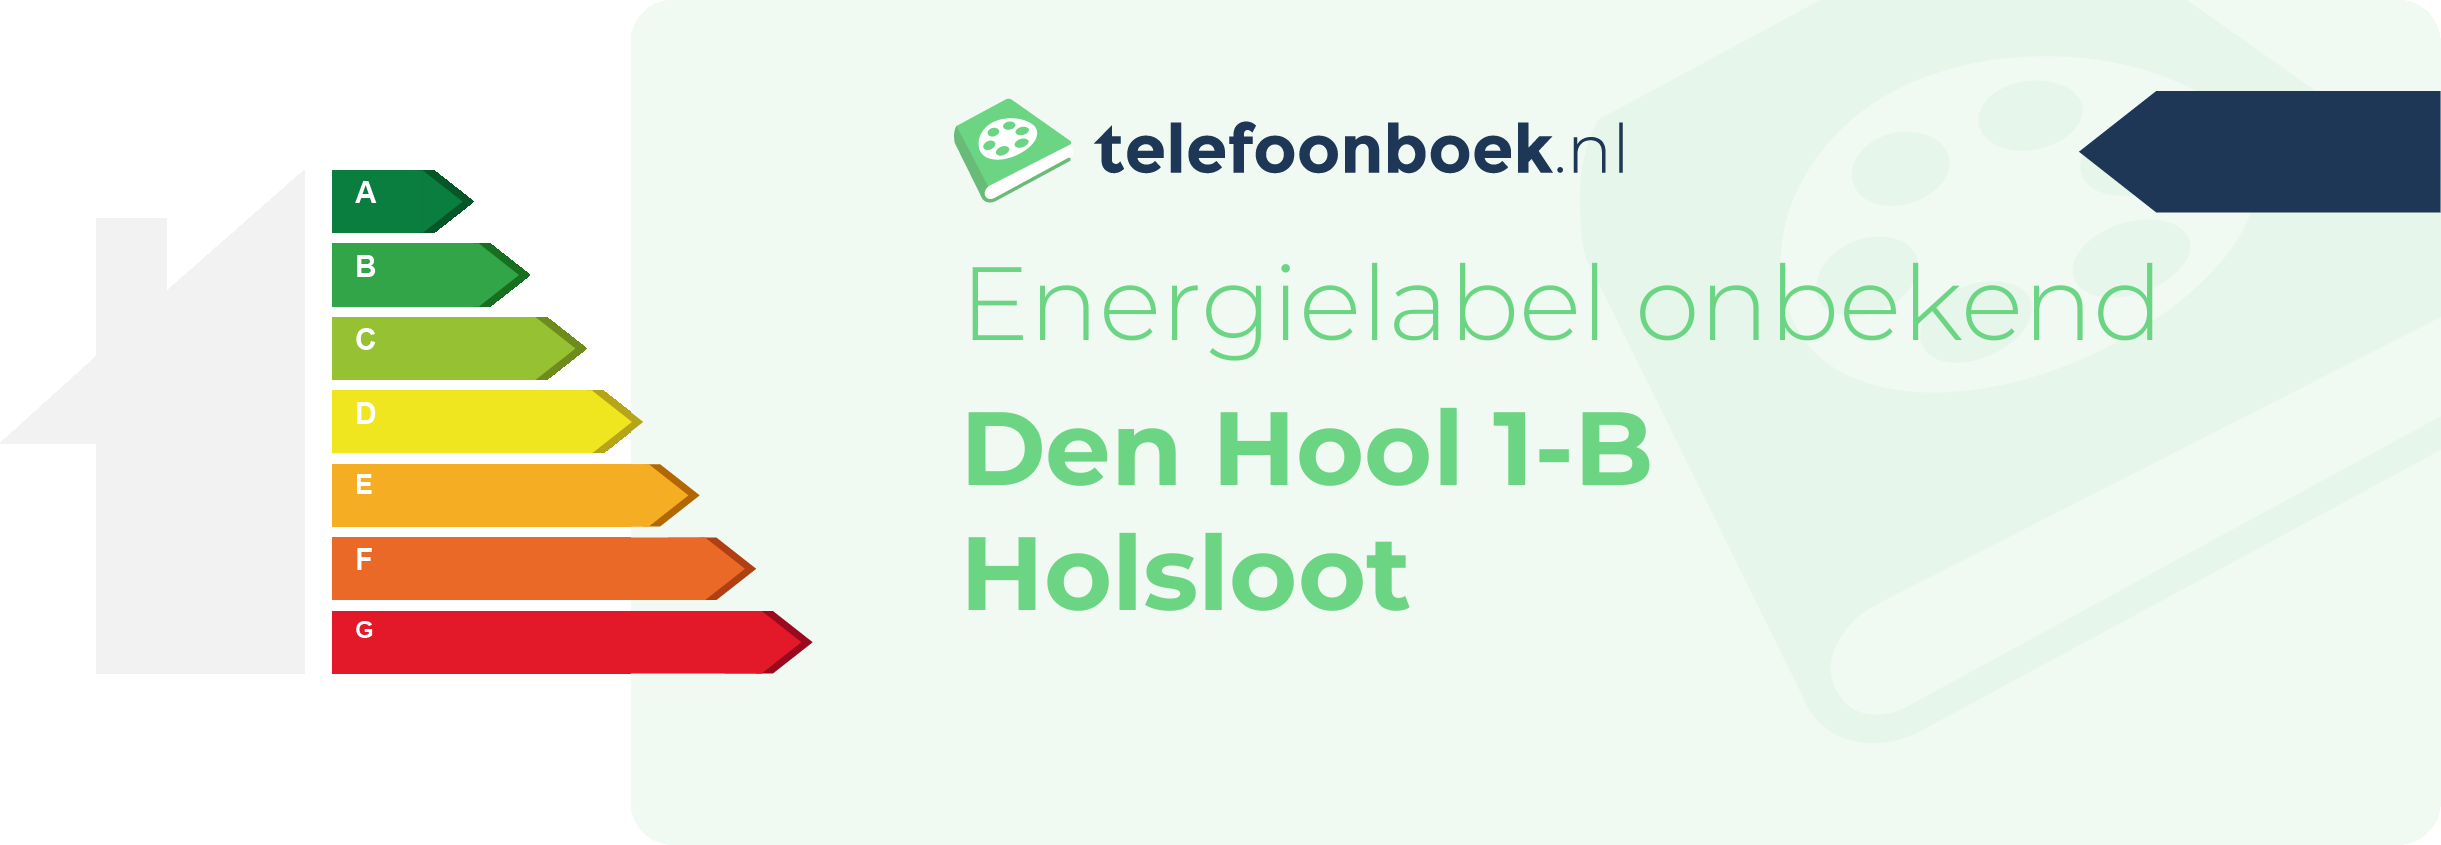 Energielabel Den Hool 1-B Holsloot